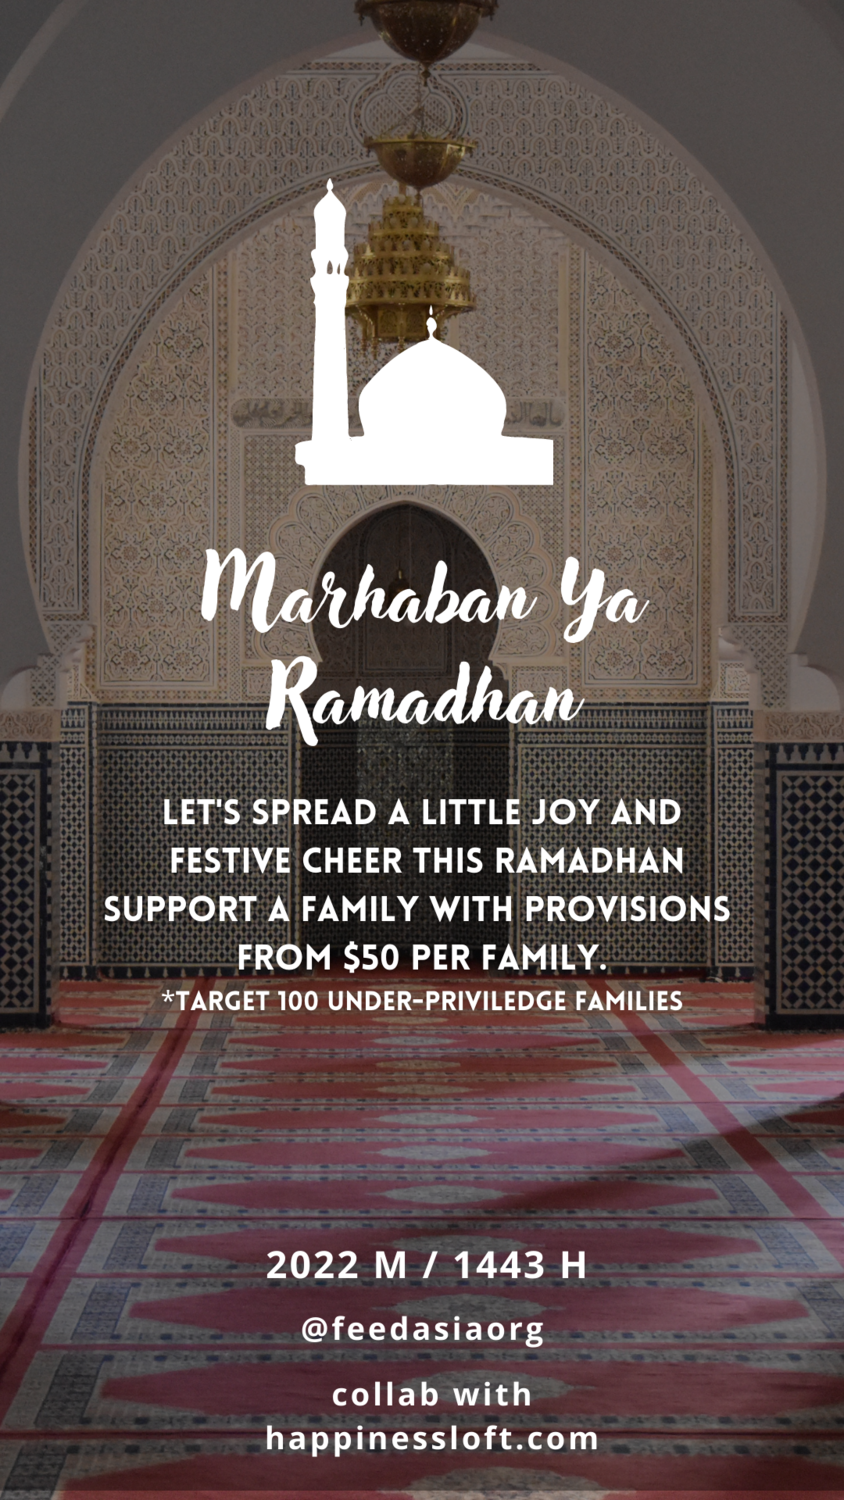 Ramadhan Happiness Drive (Fund Raising)